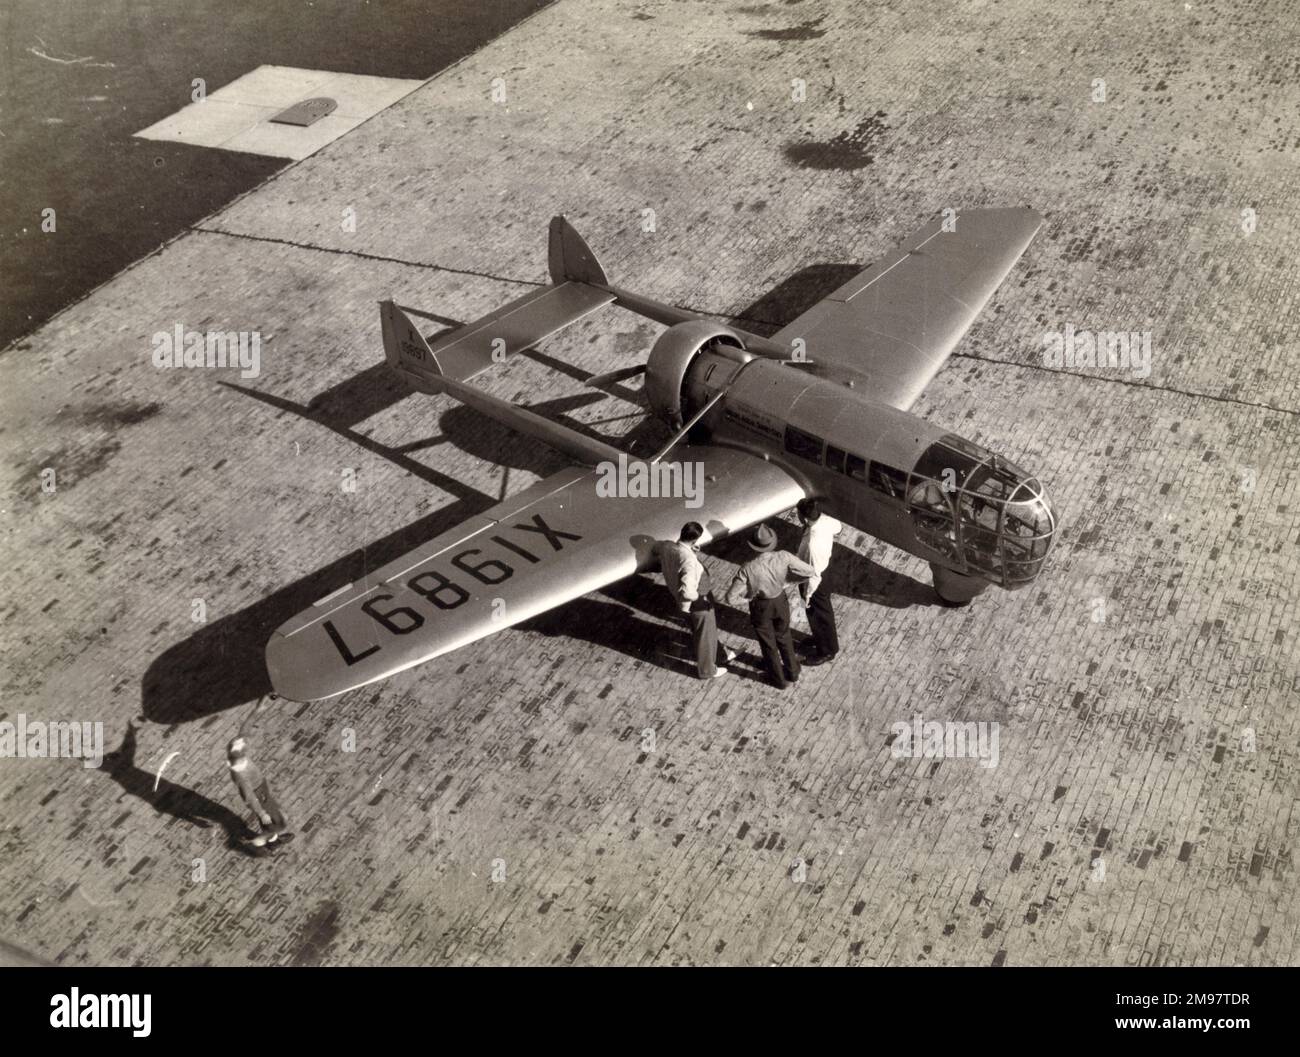 Abrams P-1 Explorer, X19897, aerial photography and survey aircraft Stock  Photo - Alamy